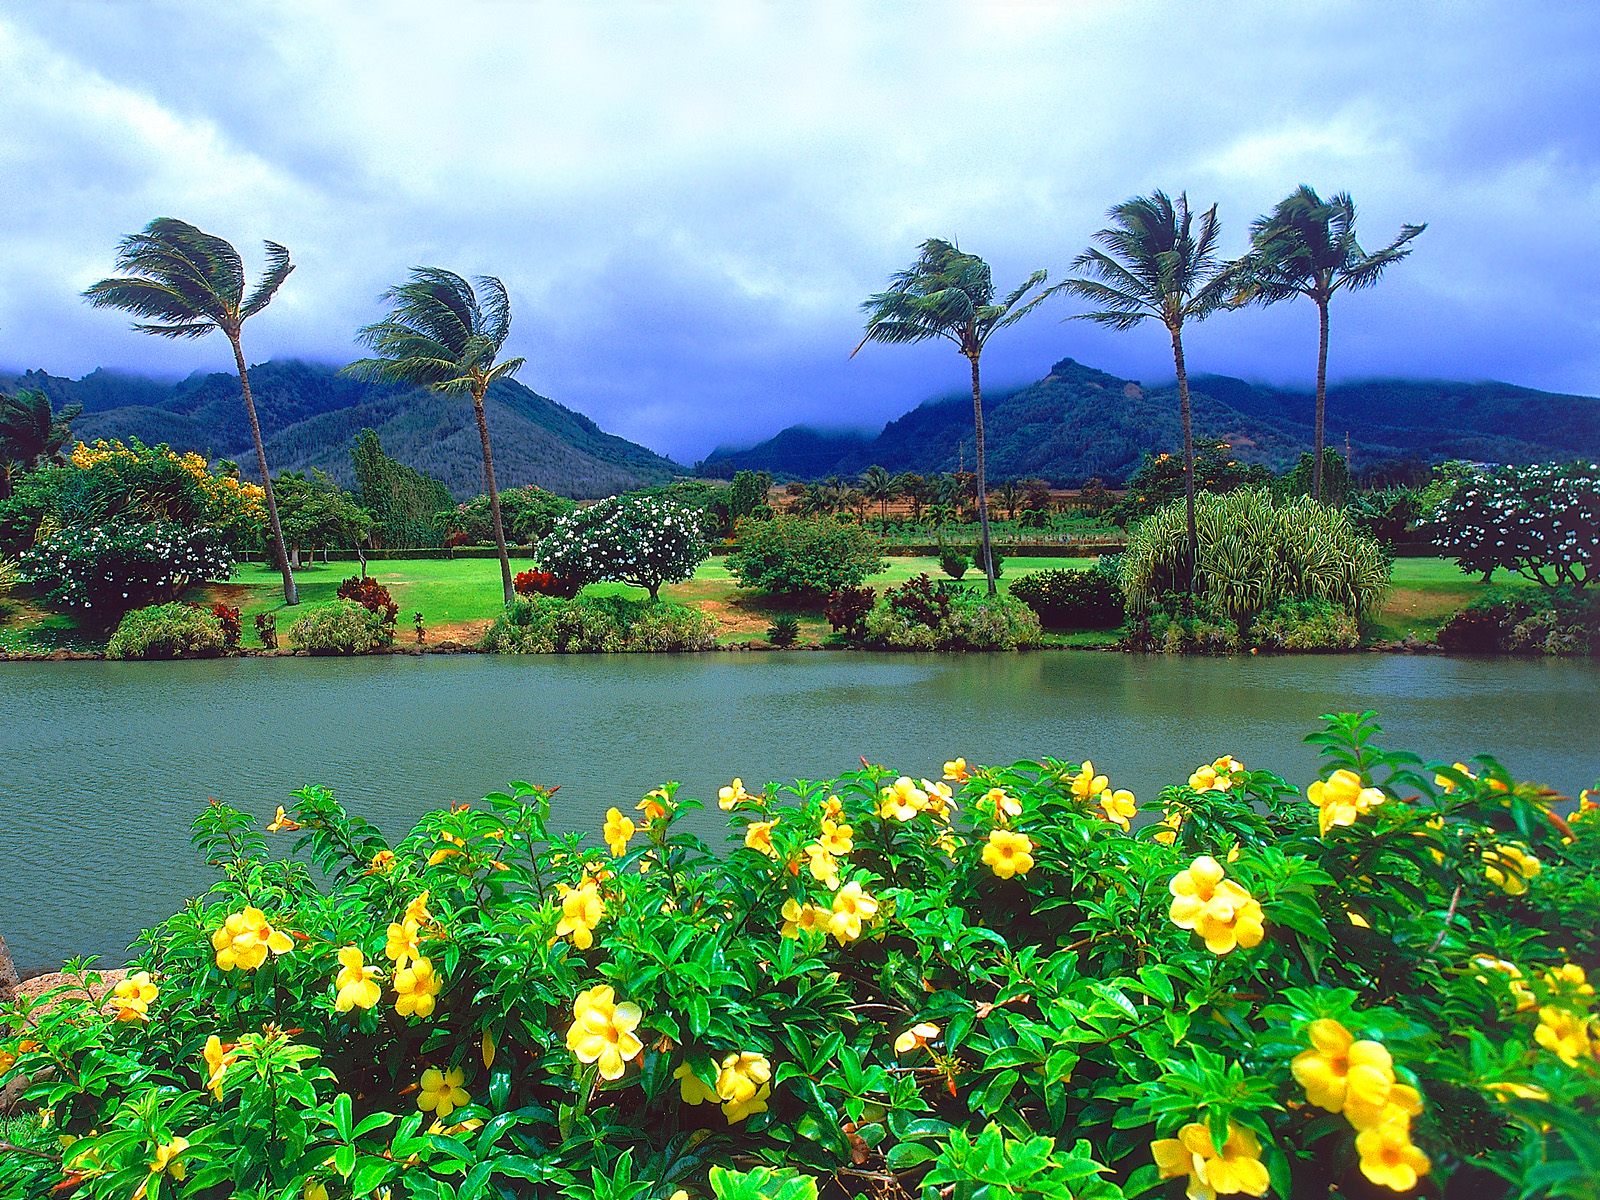 Maui Tropical Plantation Hawaii Wallpaper Pictures Photos